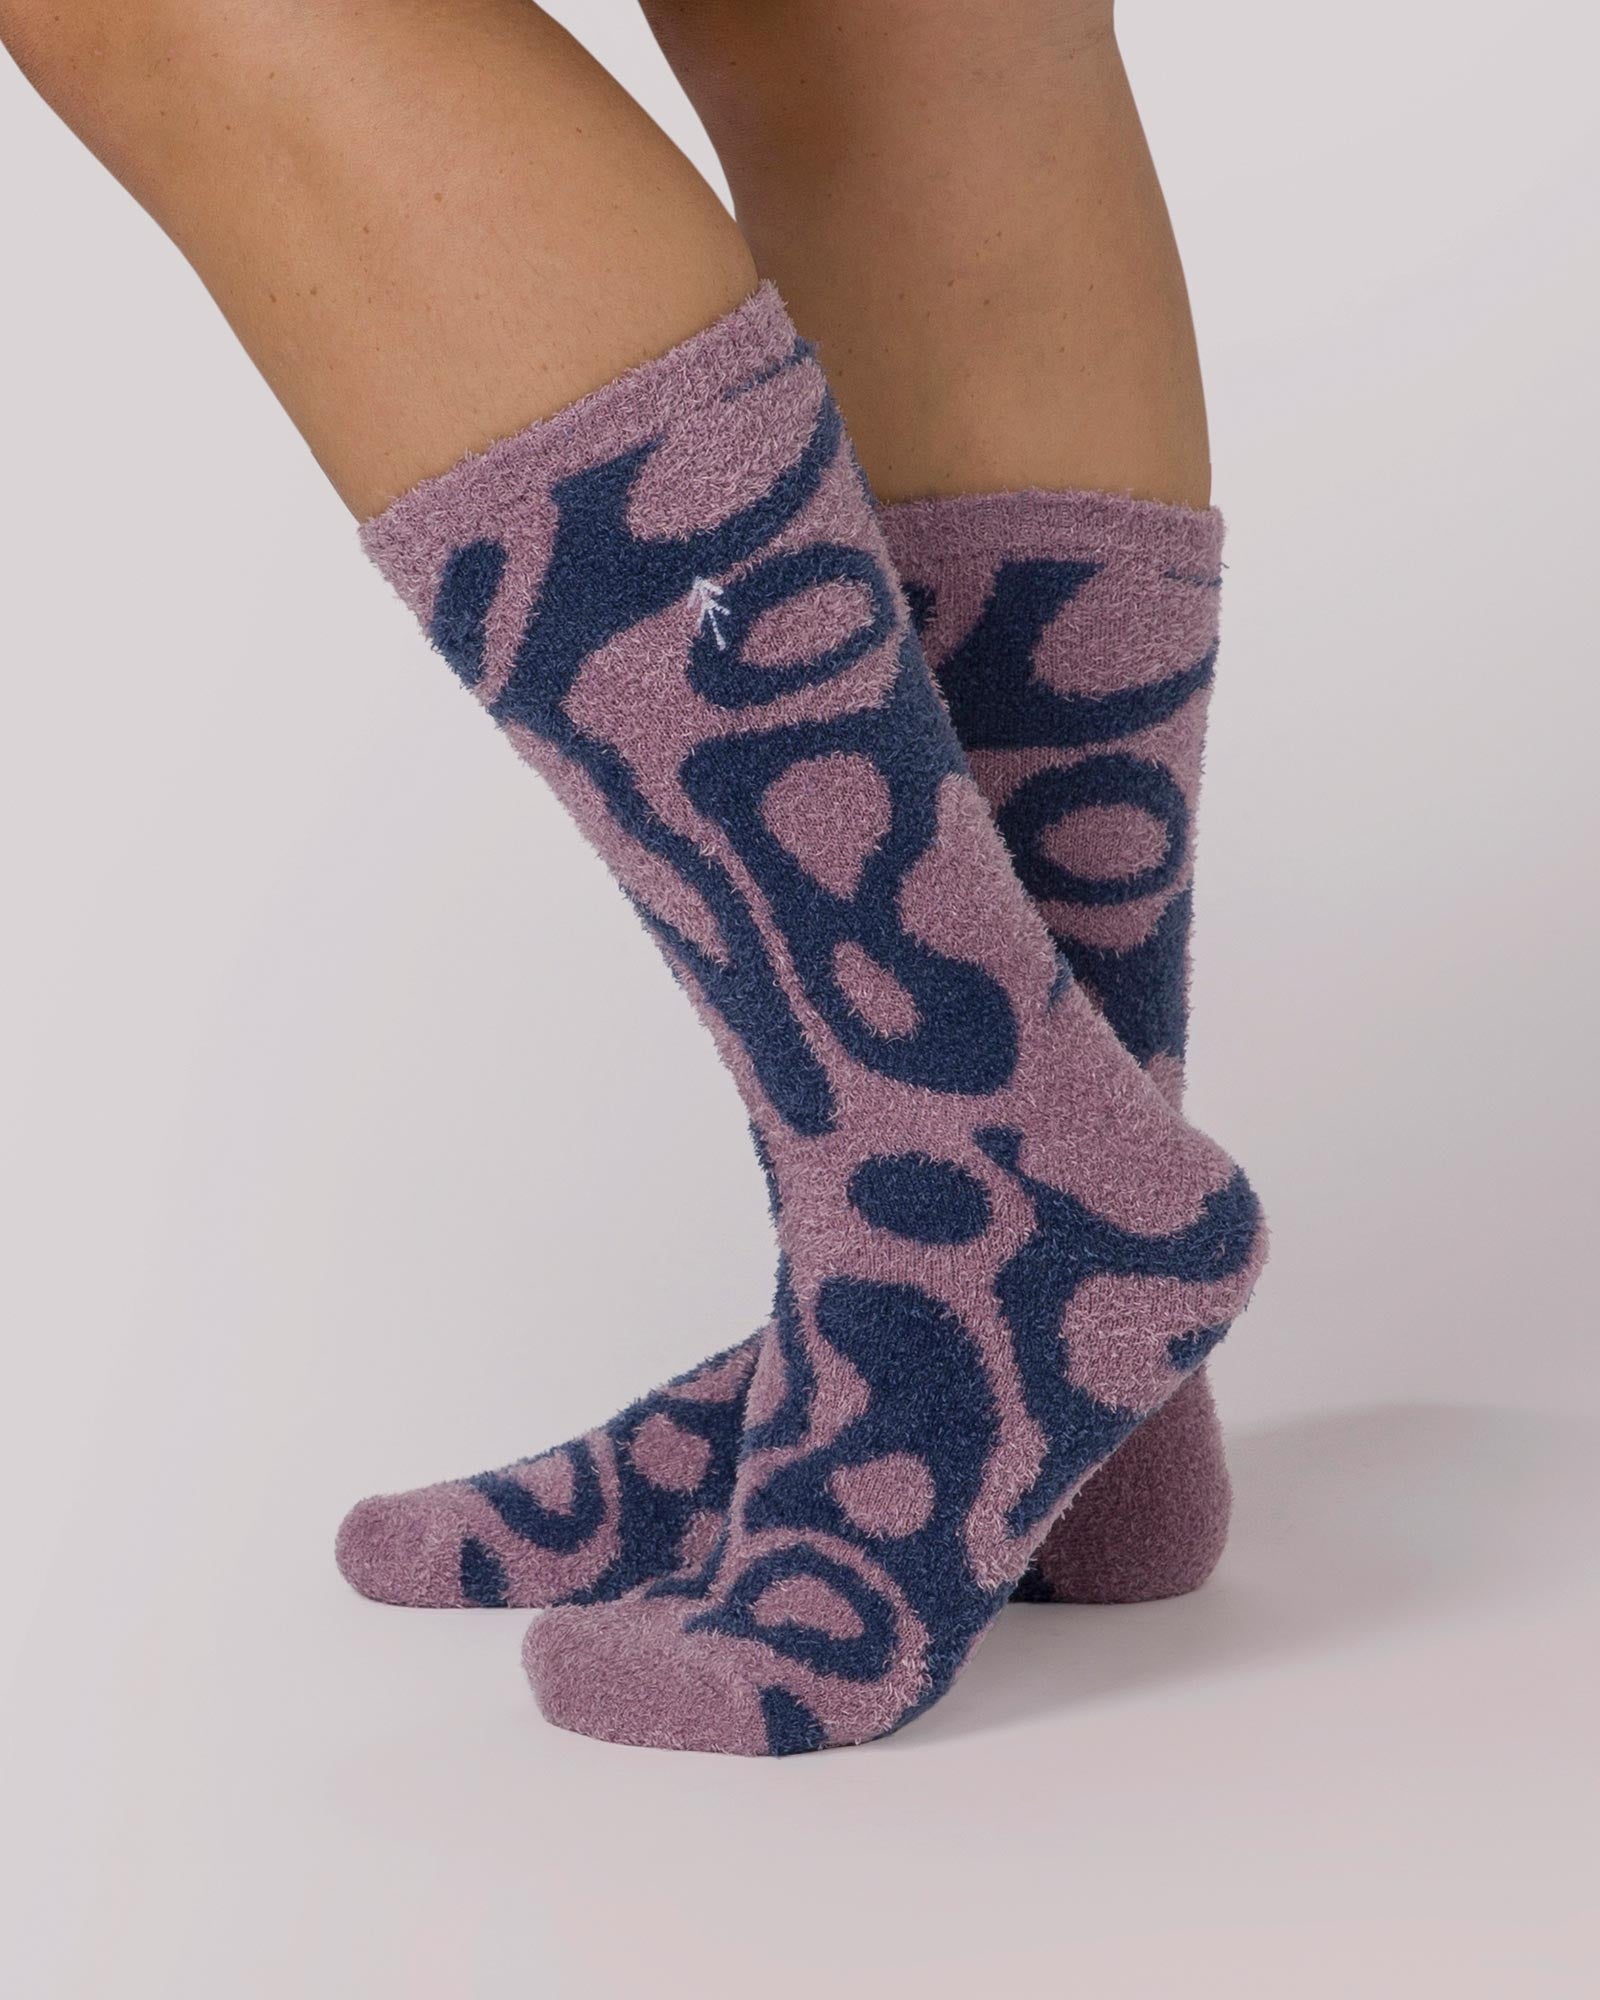 Shop Yellowstone Geysers Cozy Socks Inspired by Yellowstone